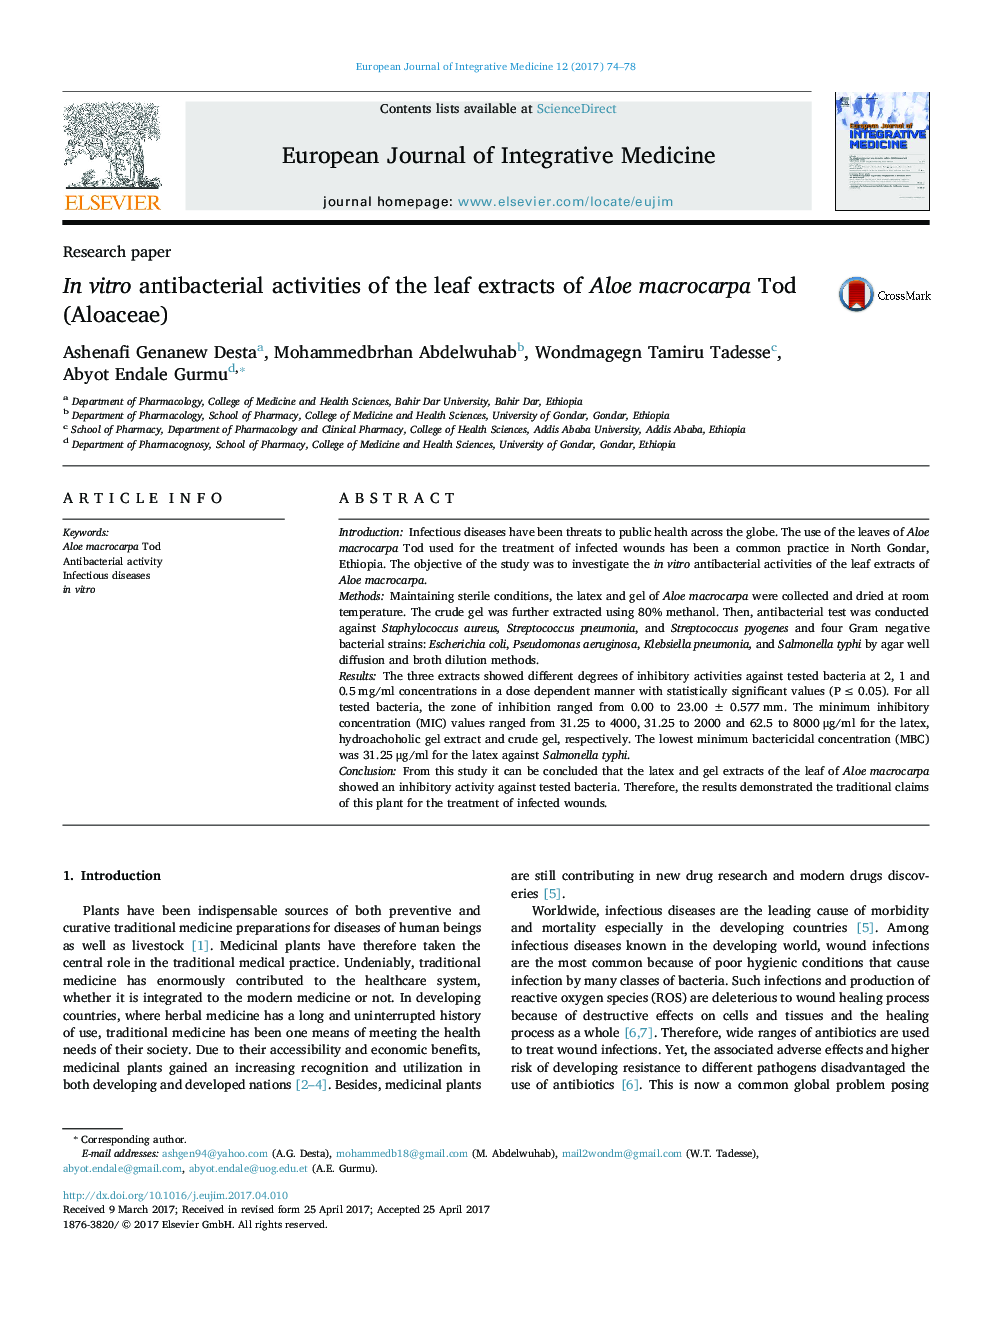 In vitro antibacterial activities of the leaf extracts of Aloe macrocarpa Tod (Aloaceae)